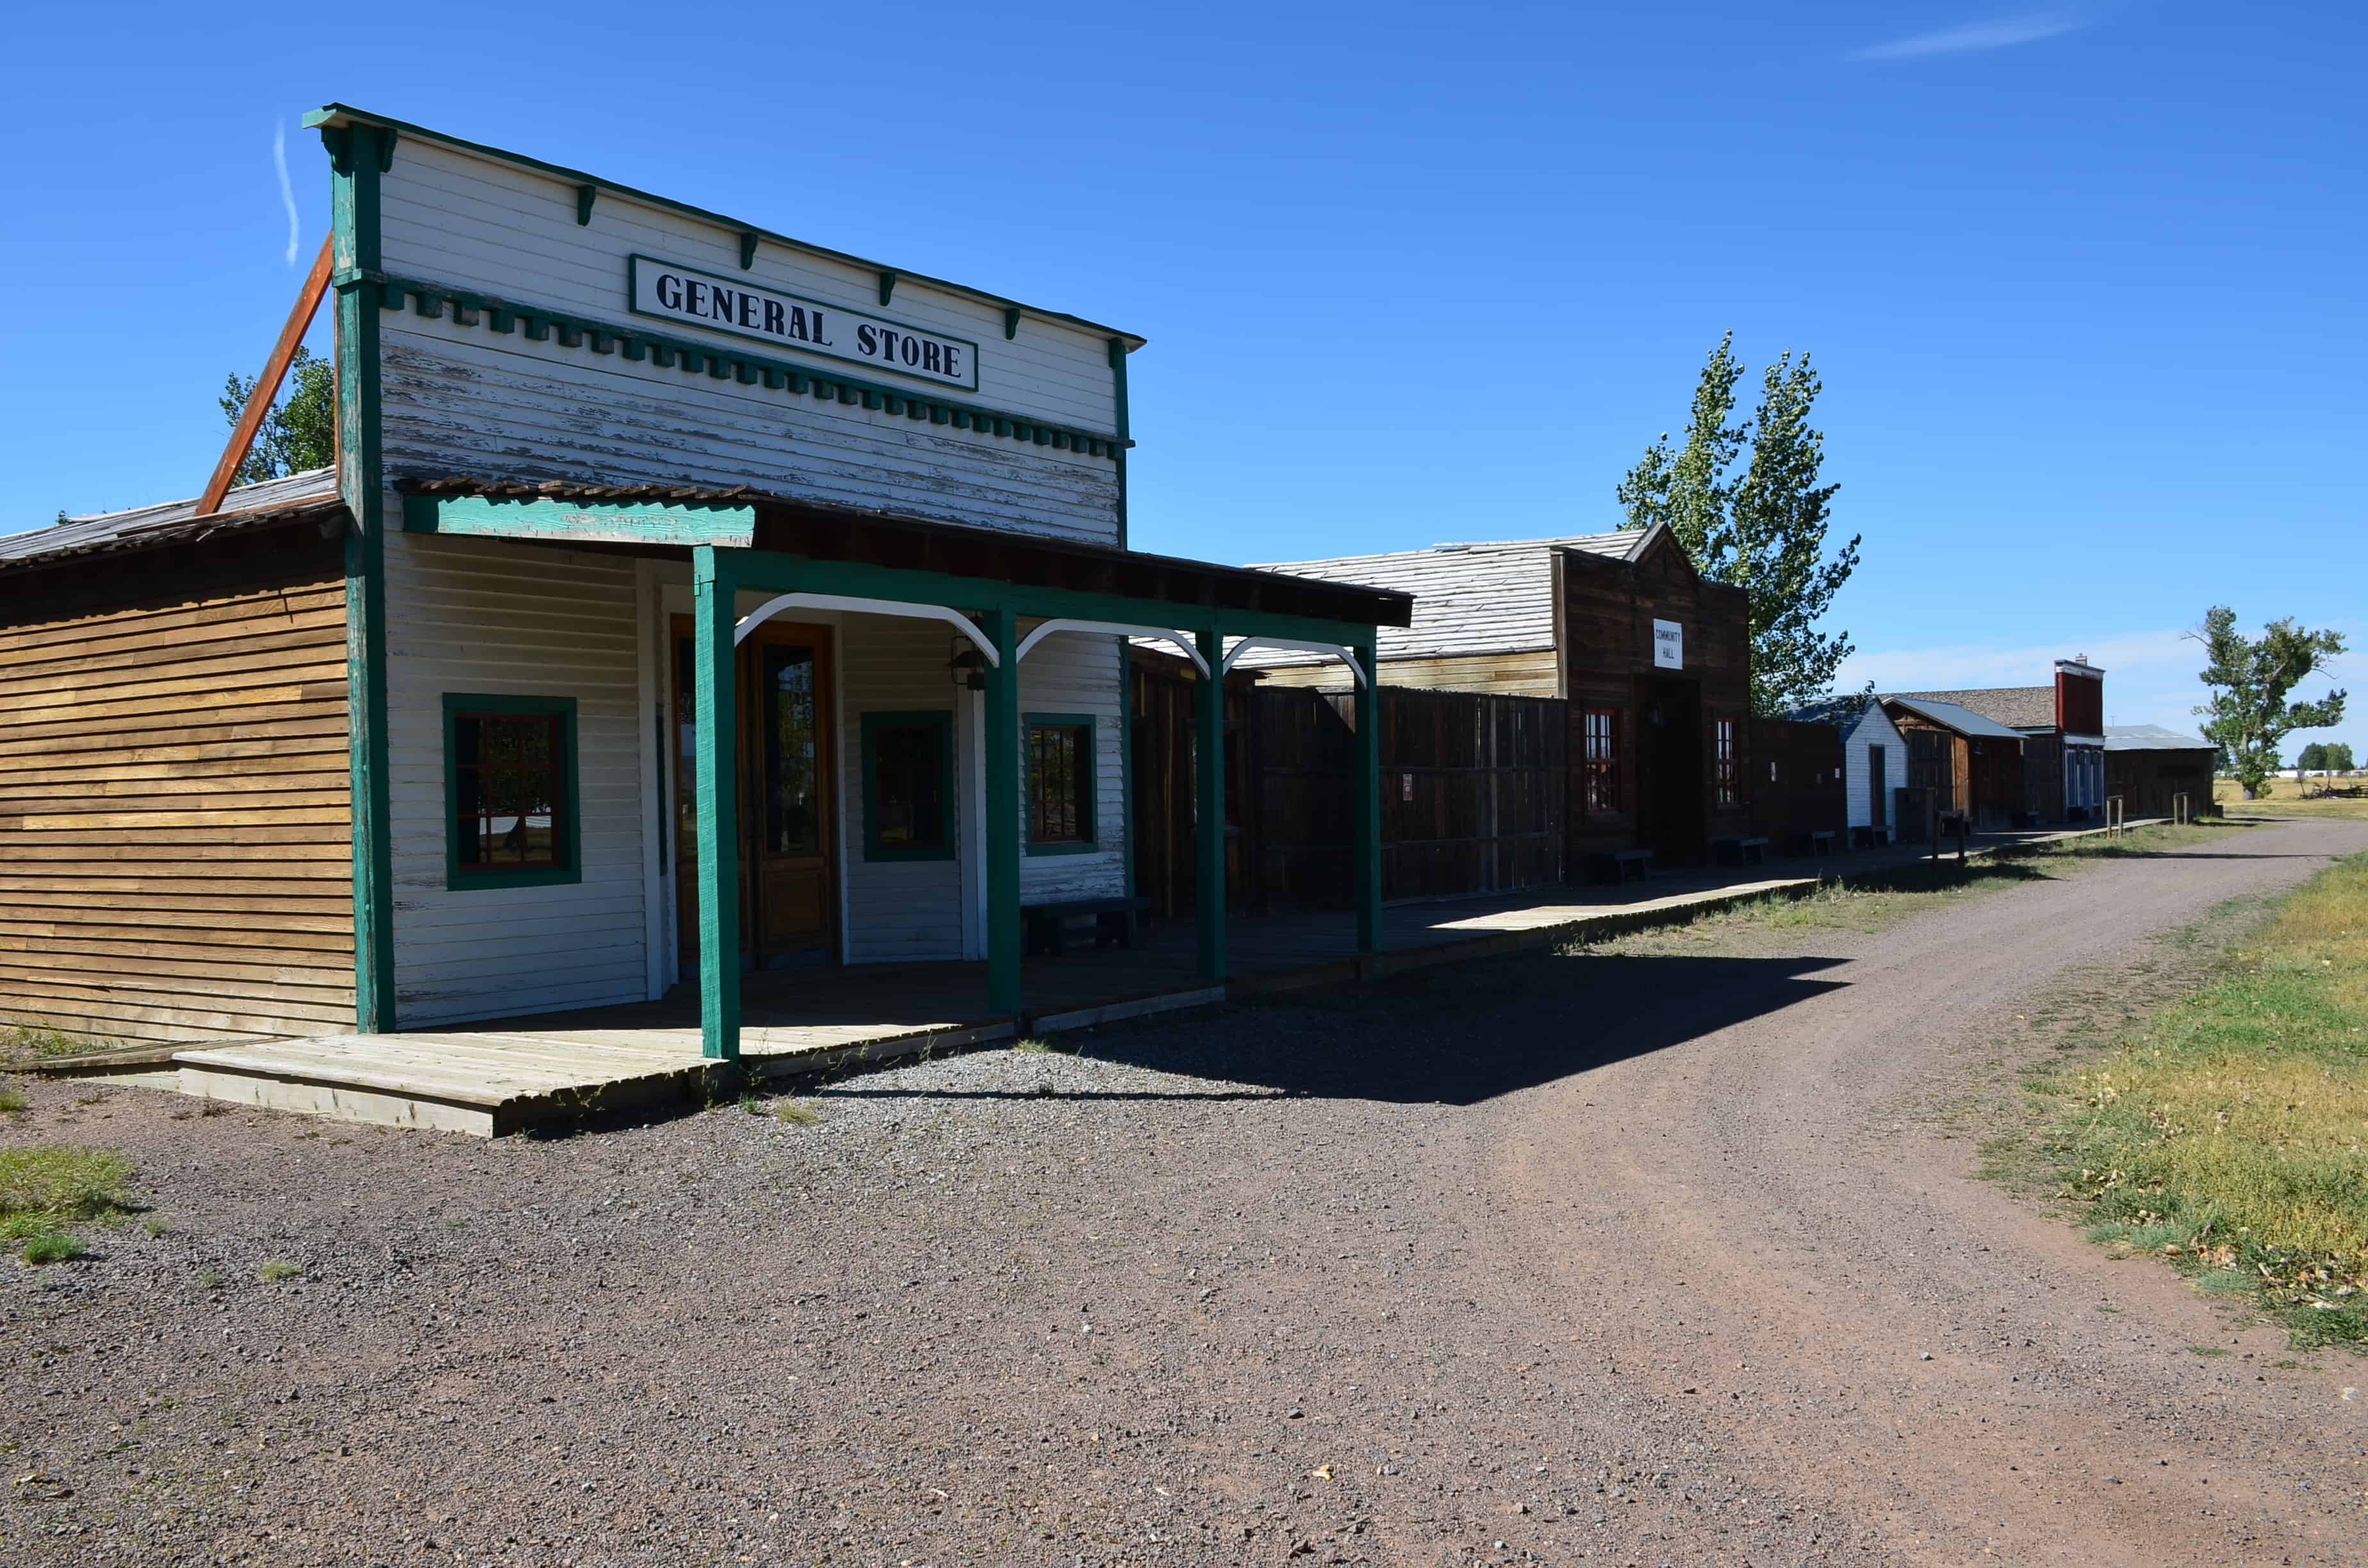 Pioneer village at Wyoming Territorial Prison State Historic Site in Laramie